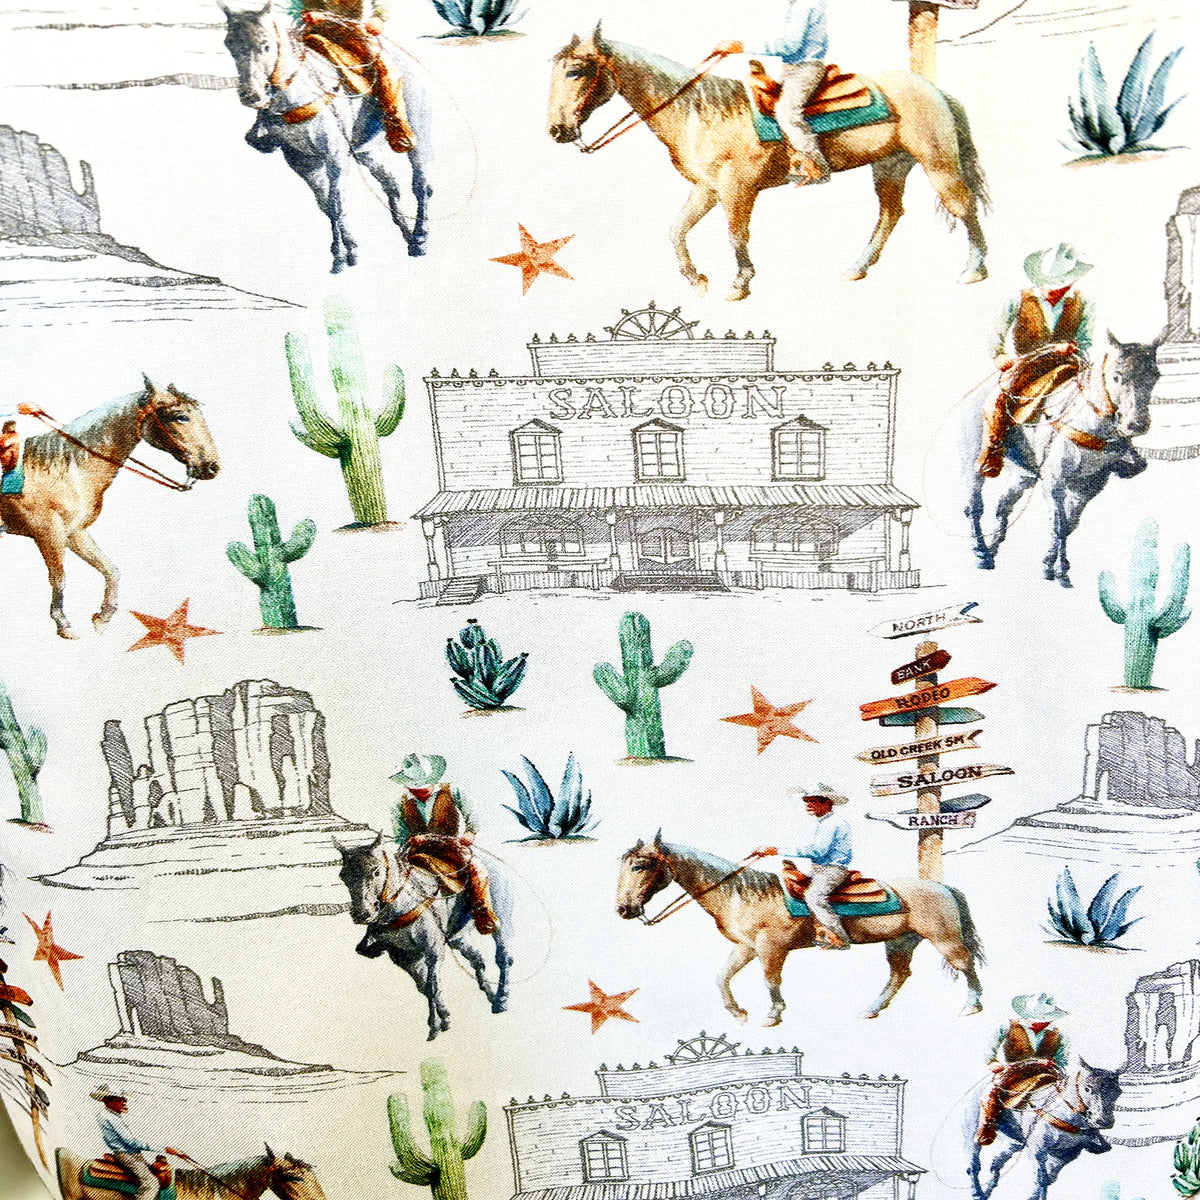 Men’s White Cactus & Cowboys Print Short Sleeve Western Shirt